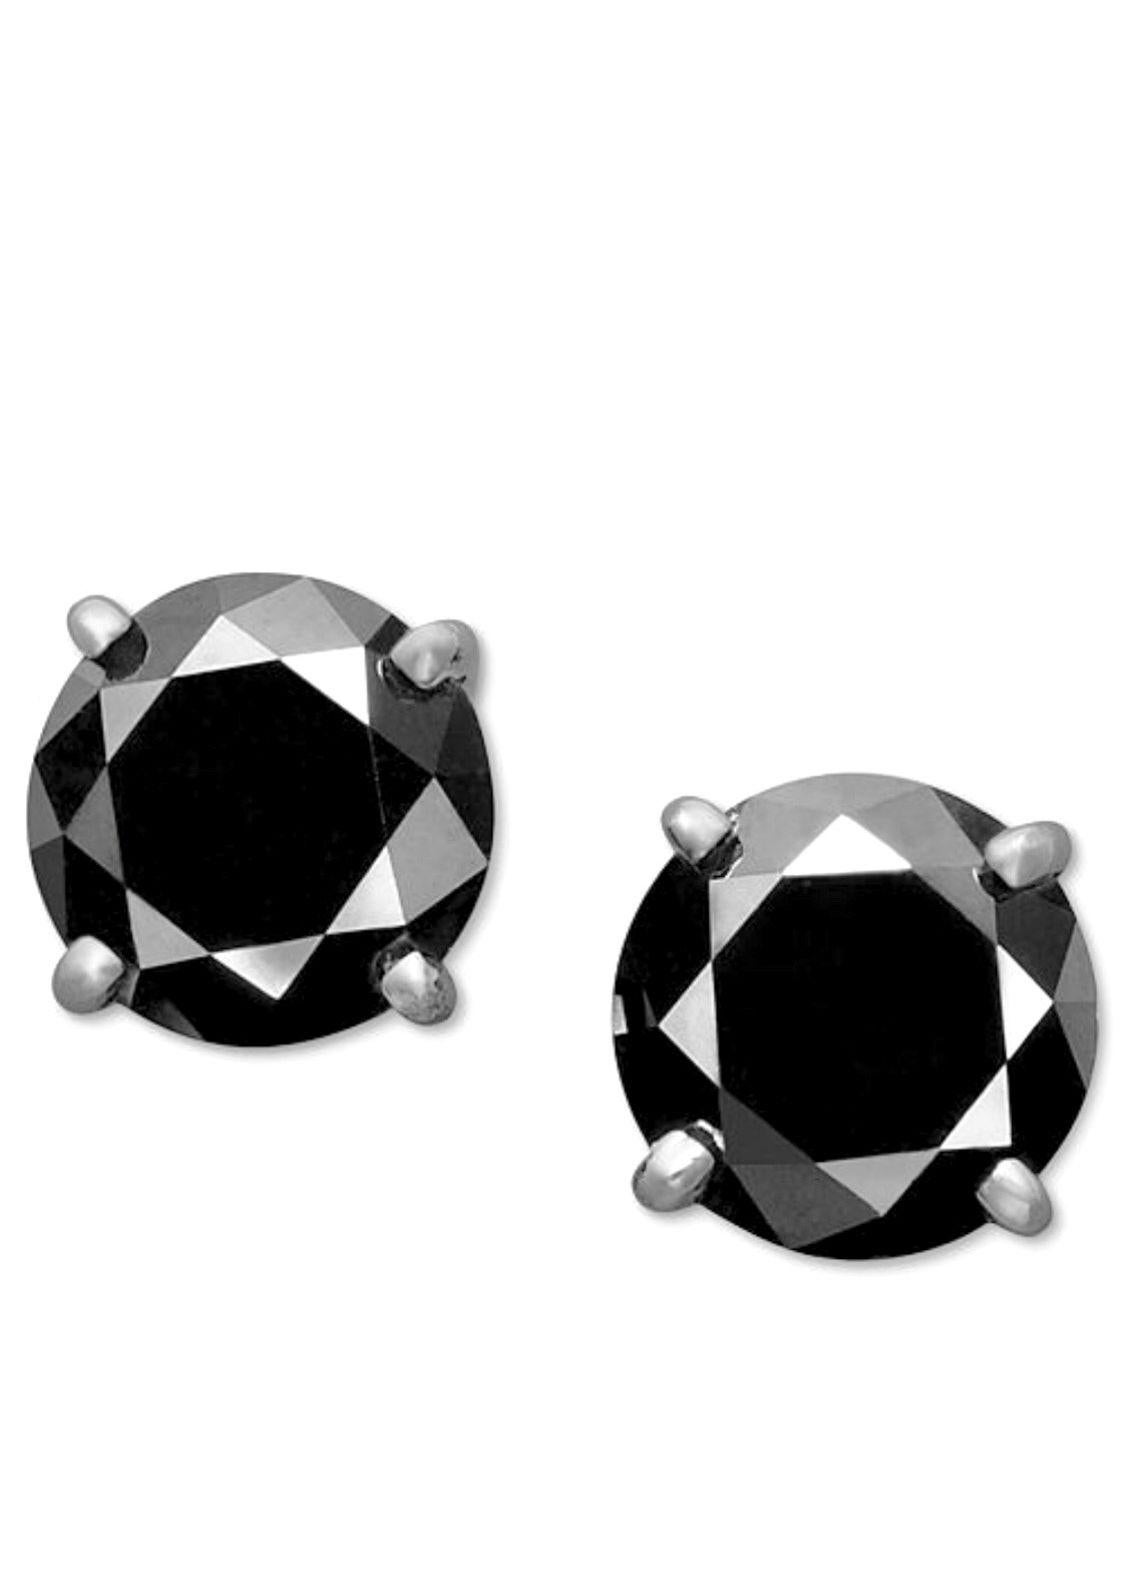 Round Cut 2.76 Carat Black Diamond Studs for Ballerina Interchangeable Earrings